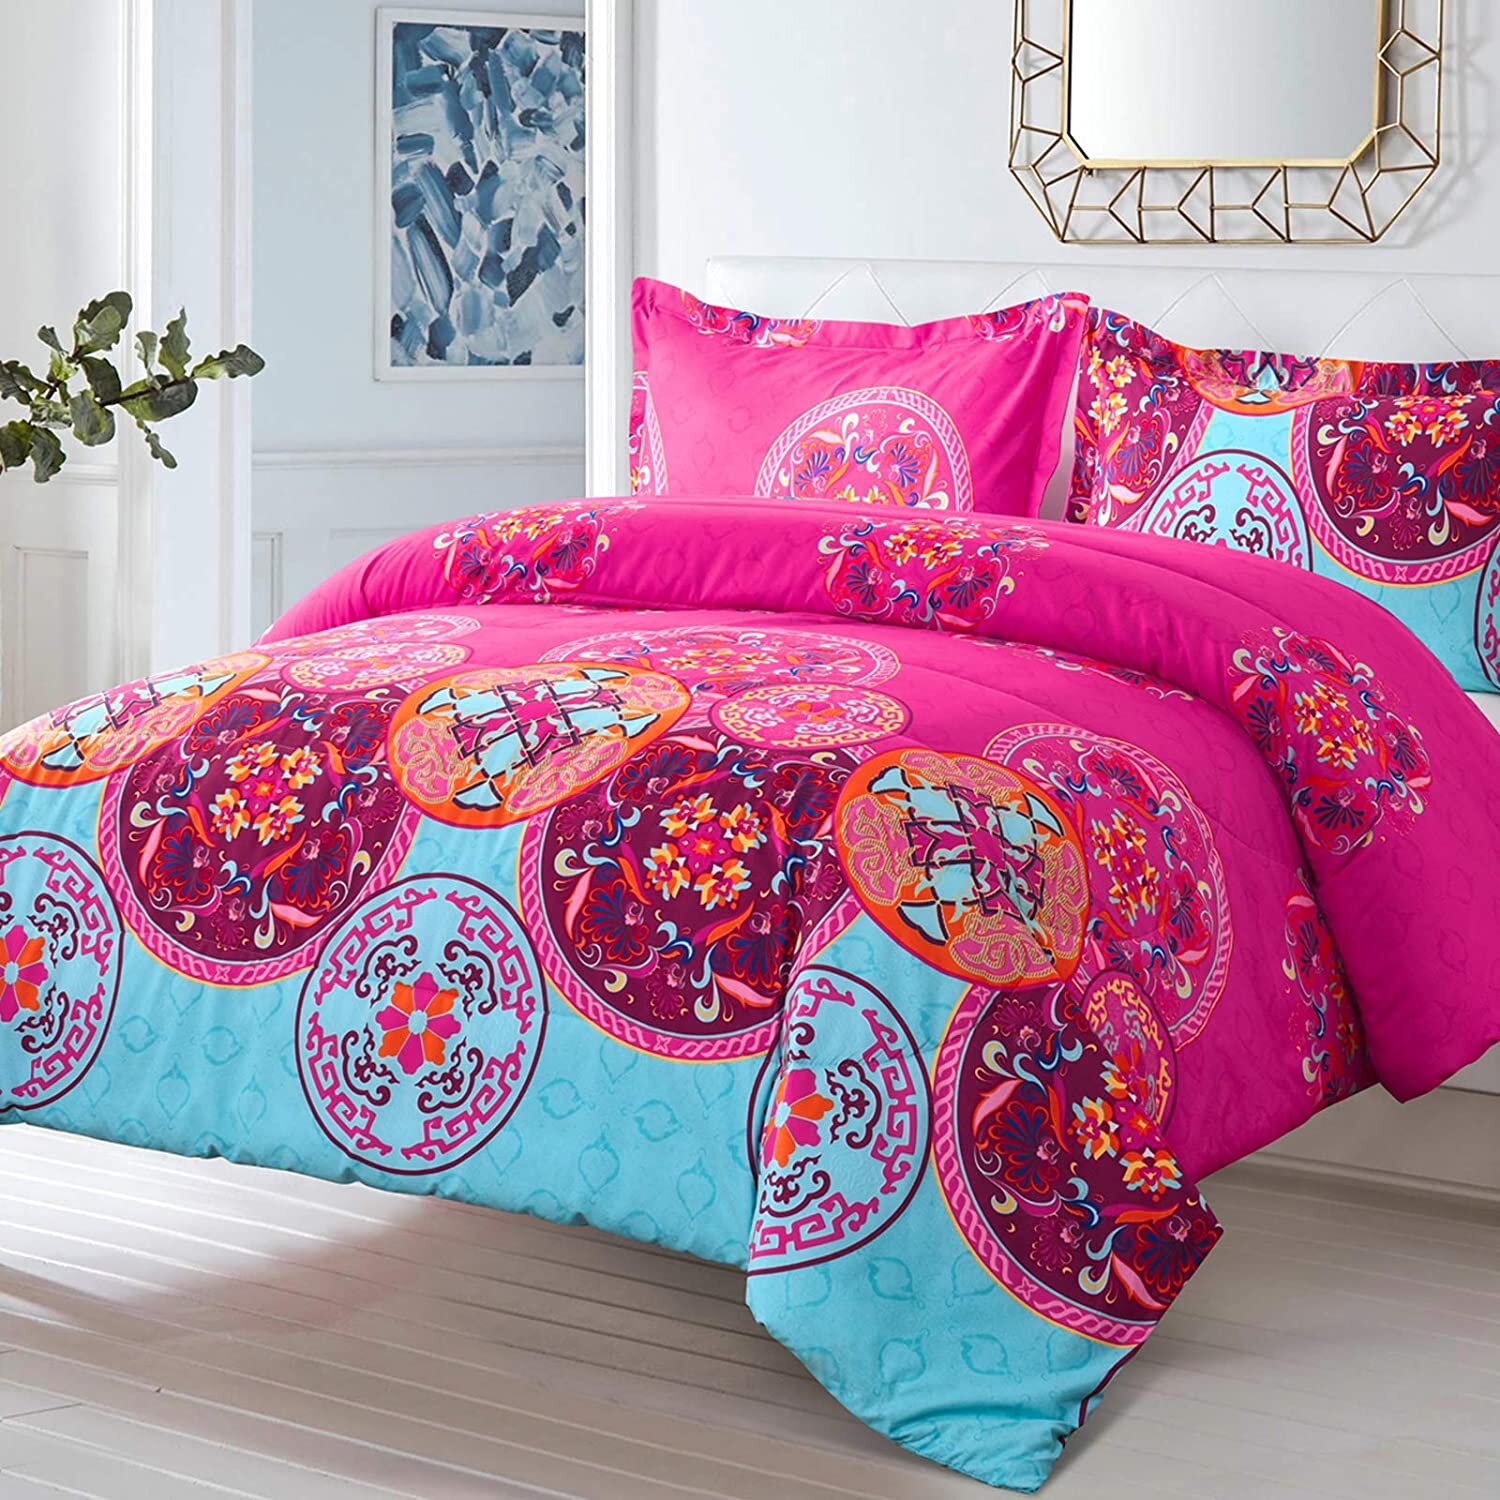 Girl Twin Comforters Sets You Ll Love In 2021 Wayfair